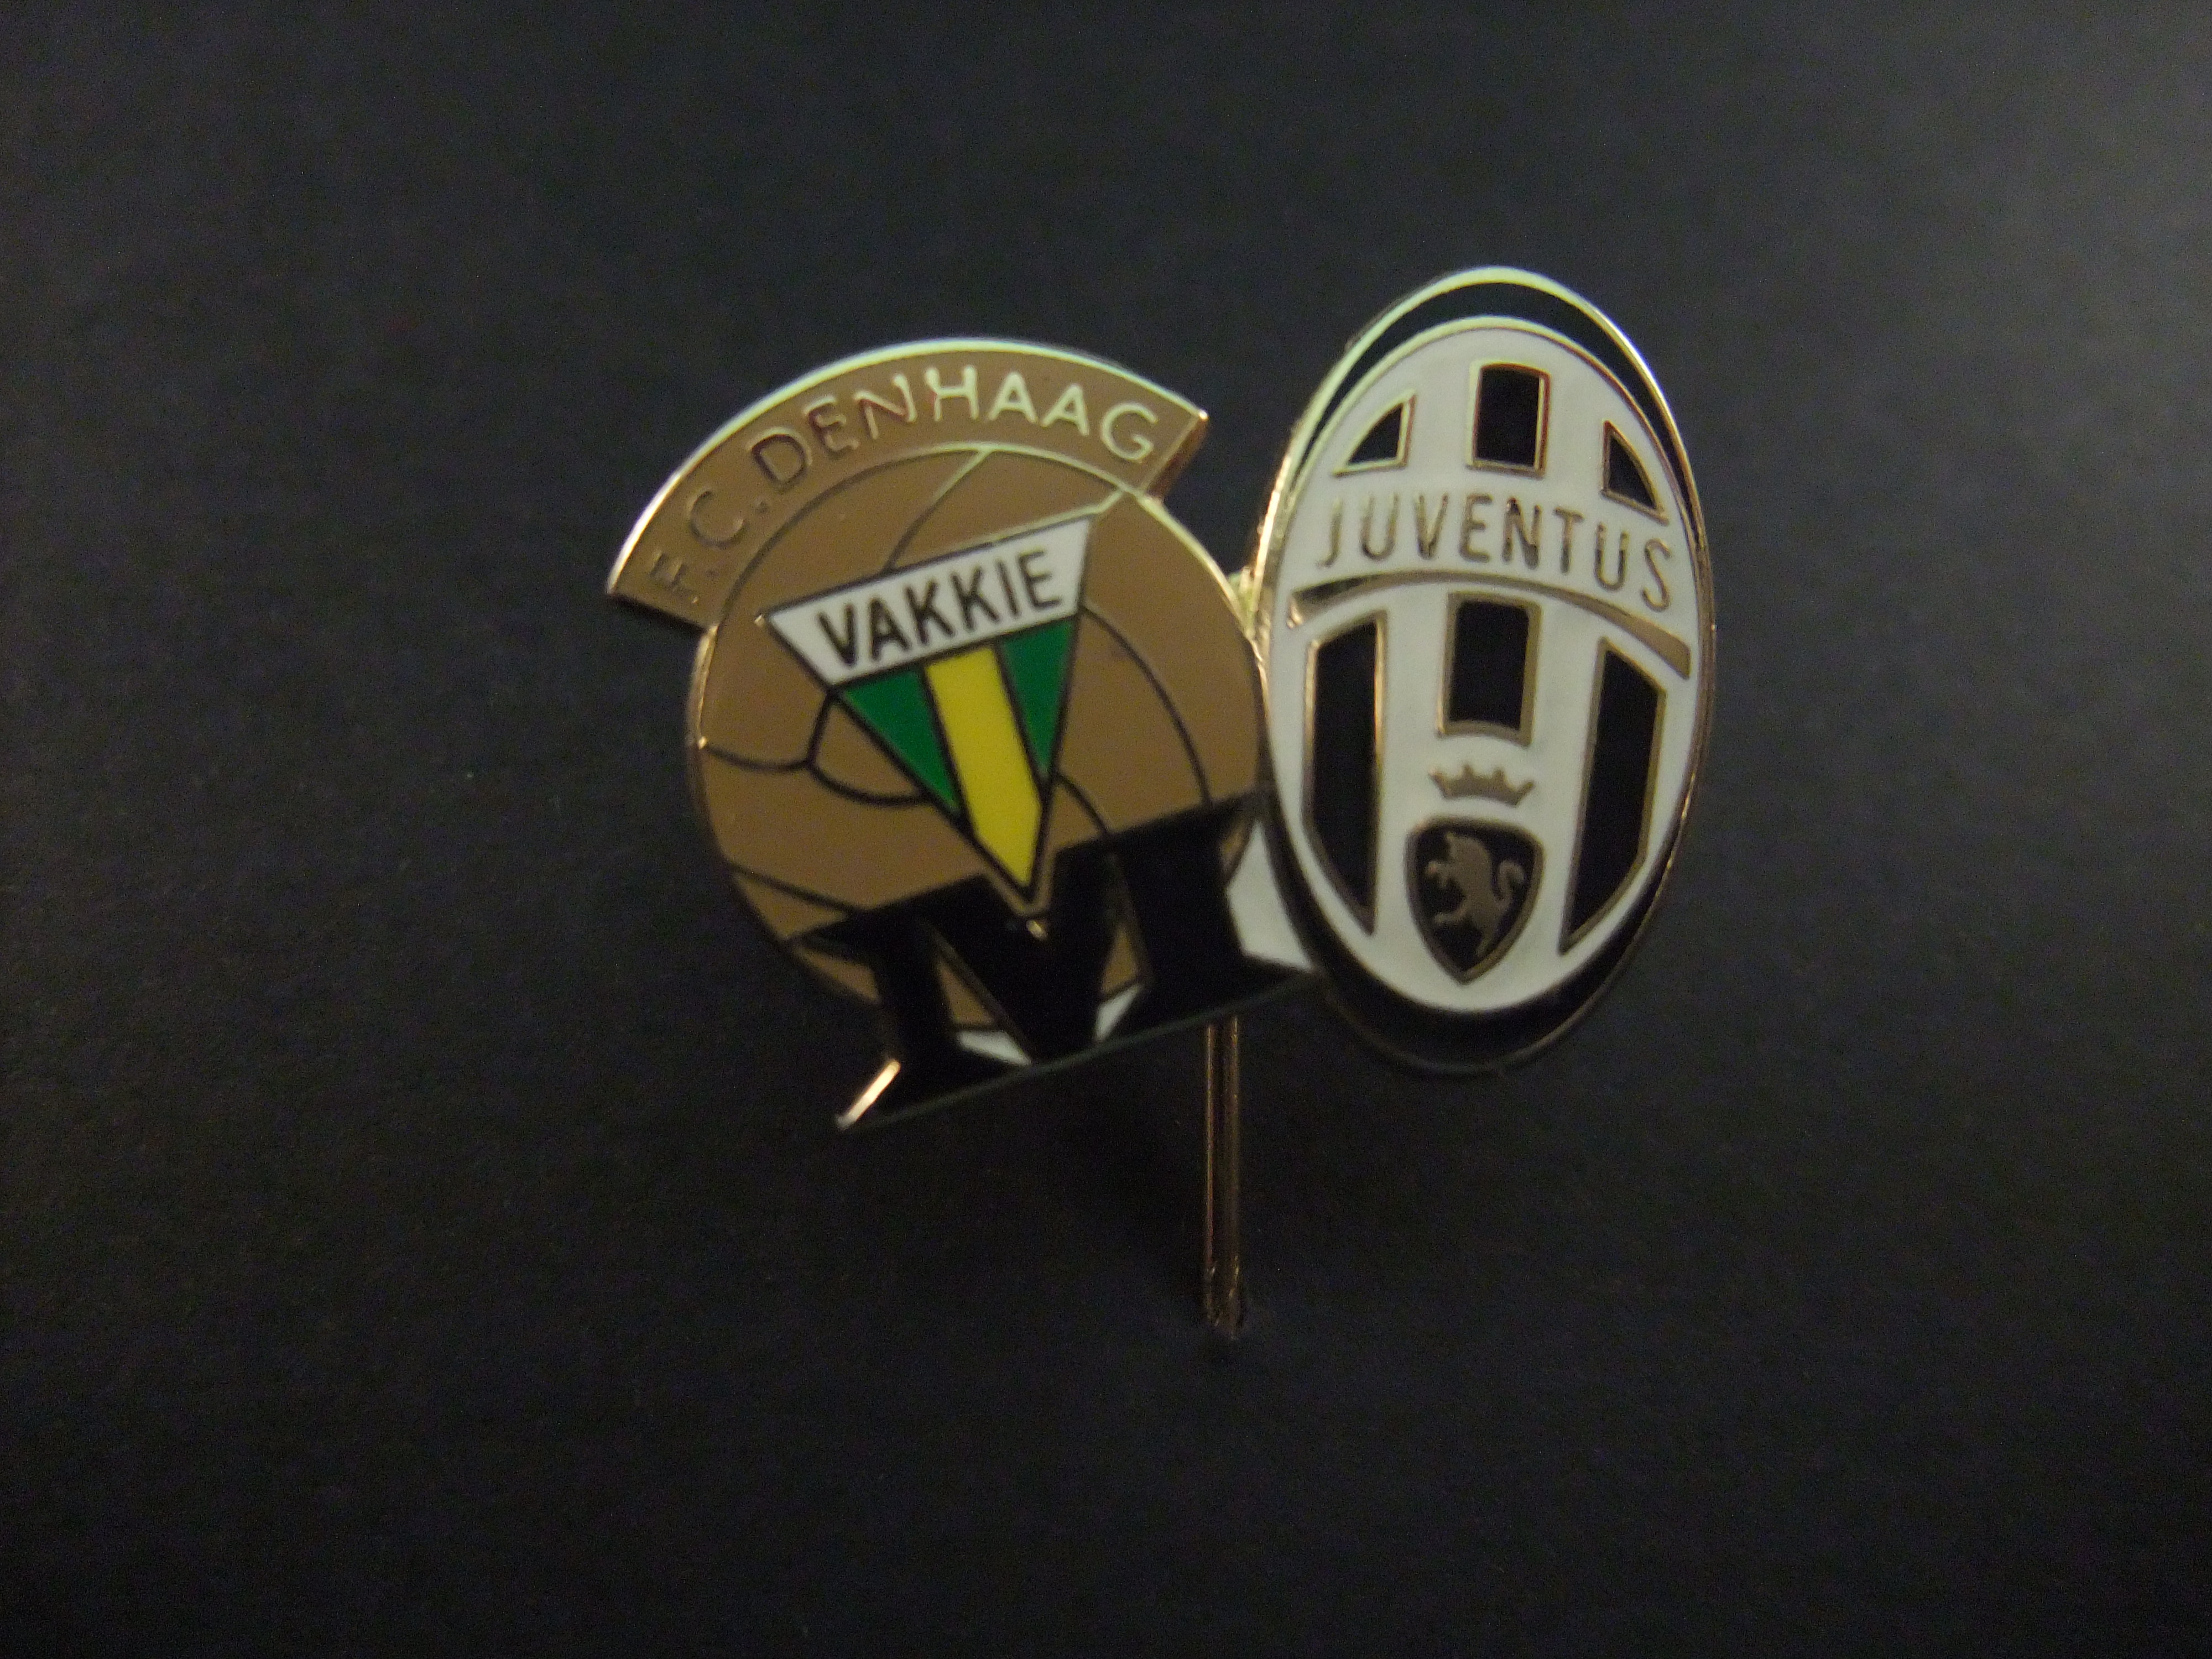 FC Den Haag Vakkie M - Juventus voetbalclub Turijn Italië emaille speld